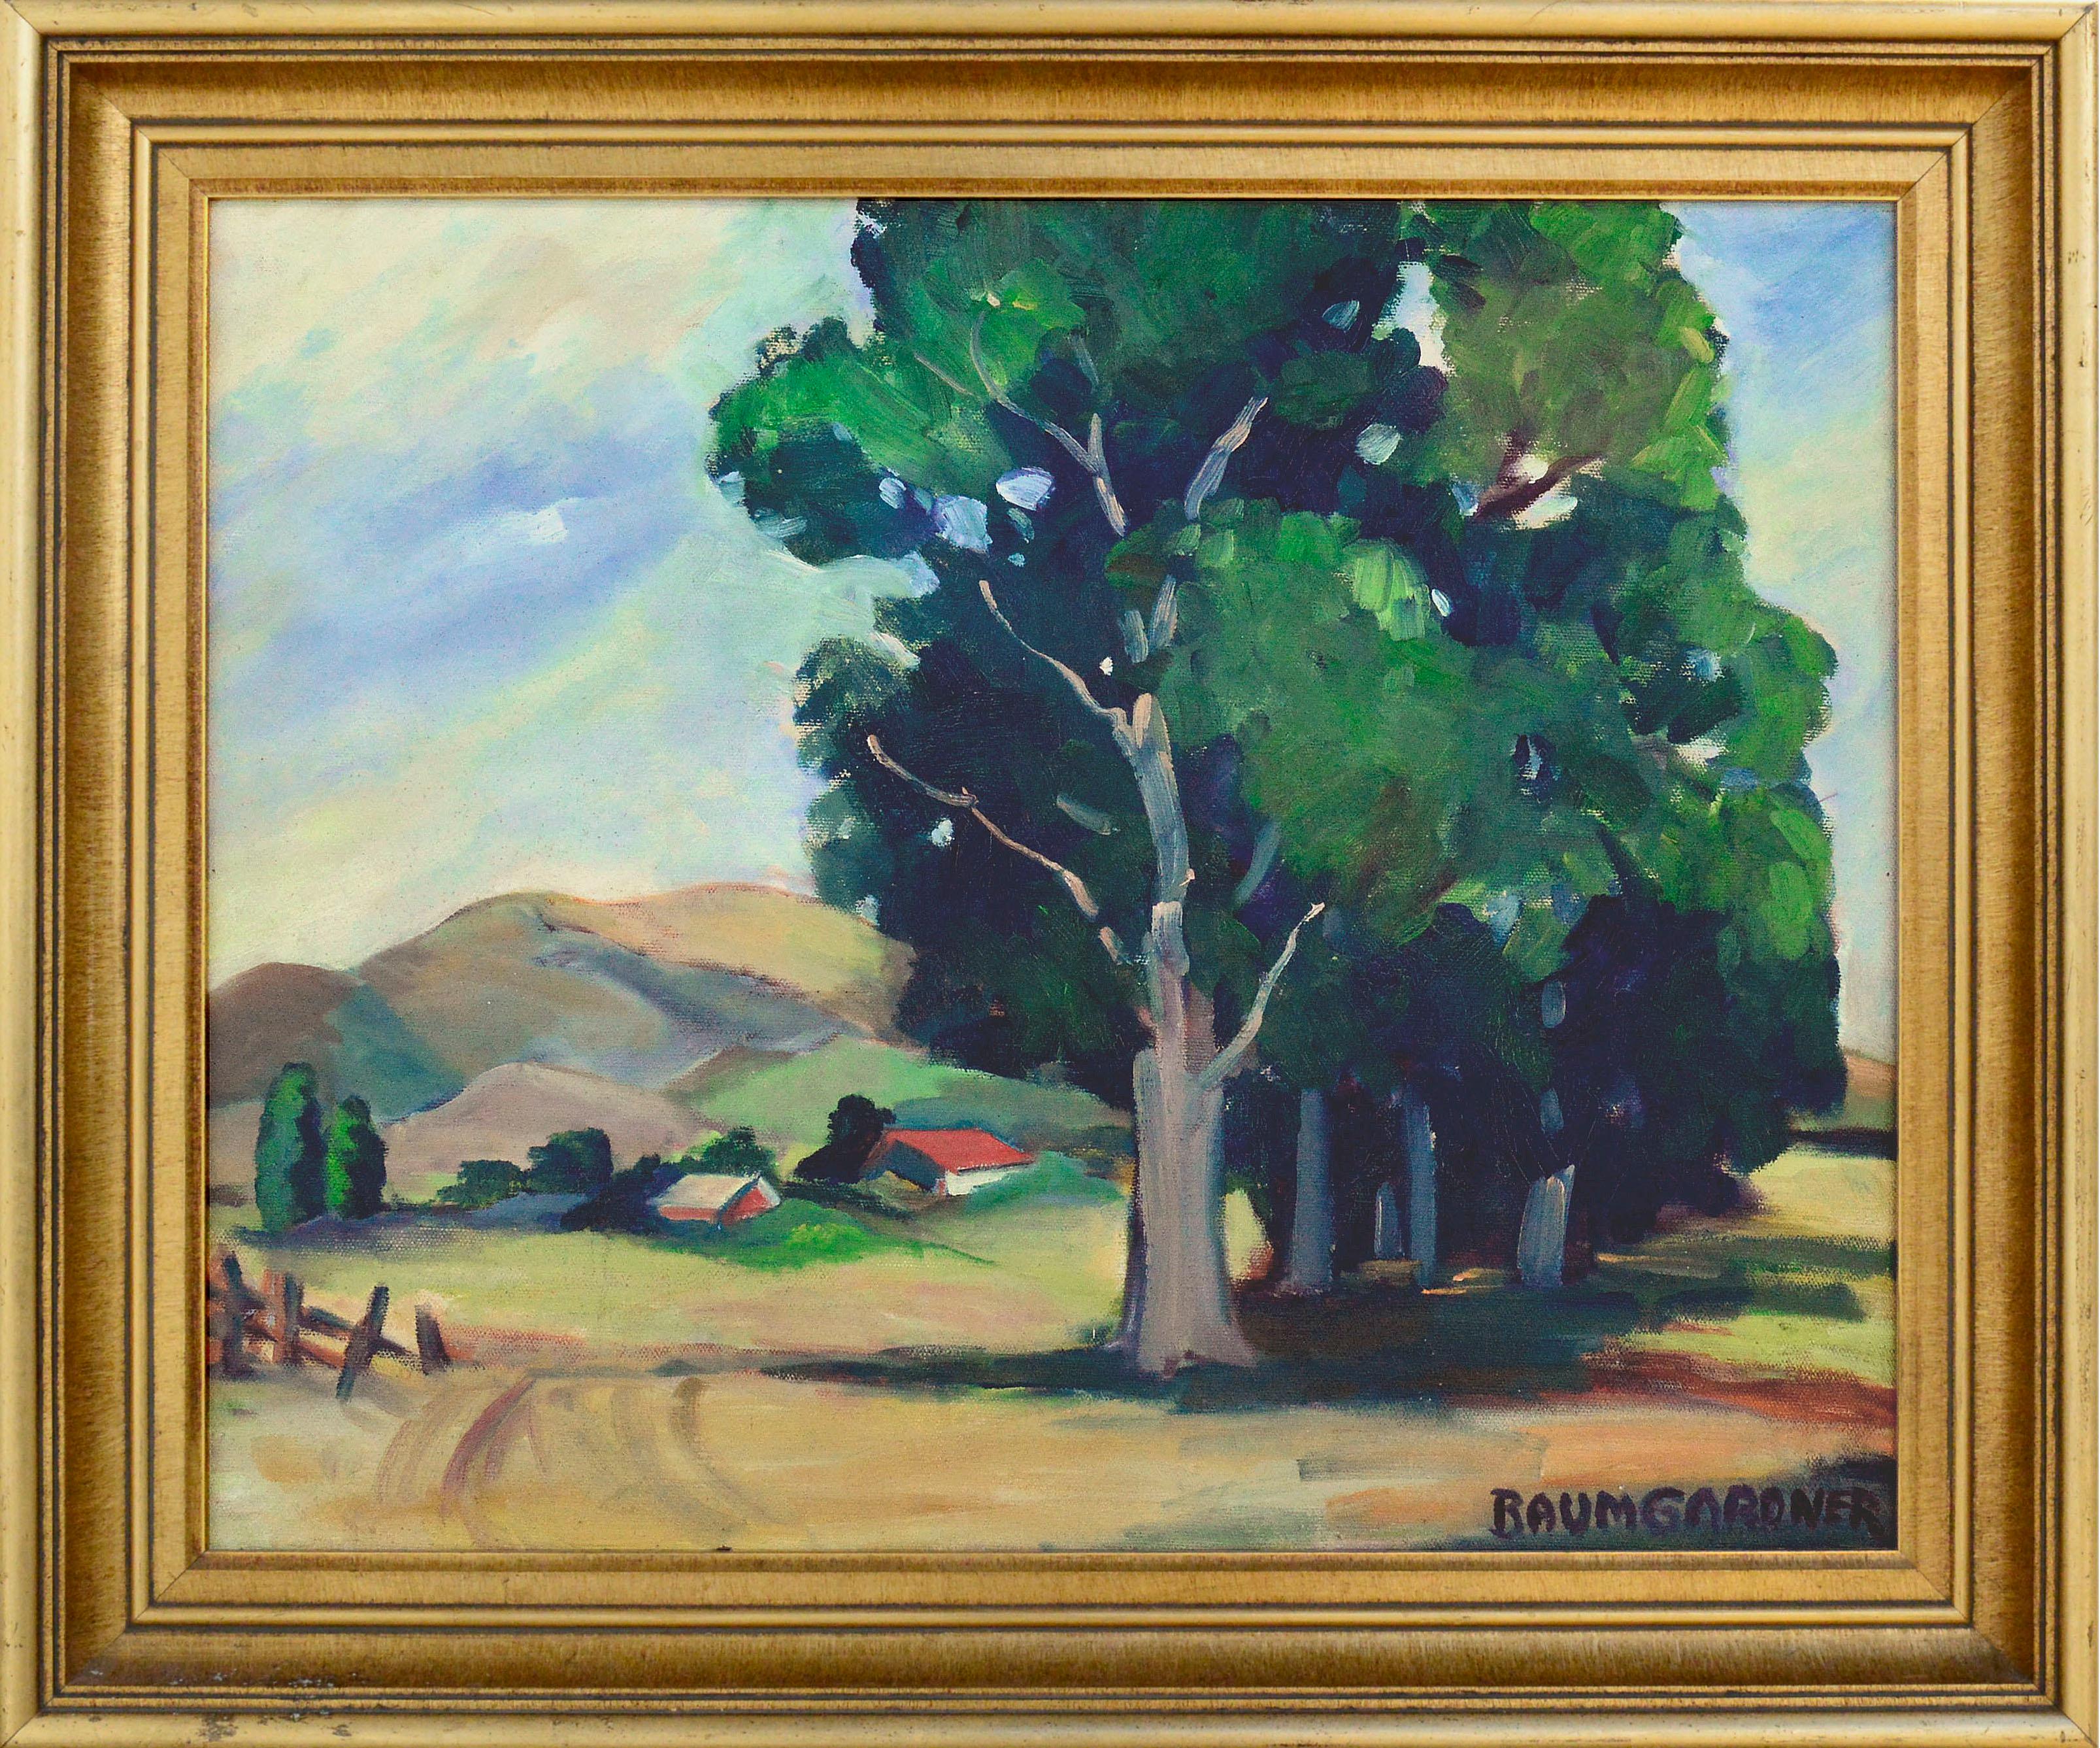 Baumgardner Landscape Painting - Farm in the Valley - Plein Air California Landscape